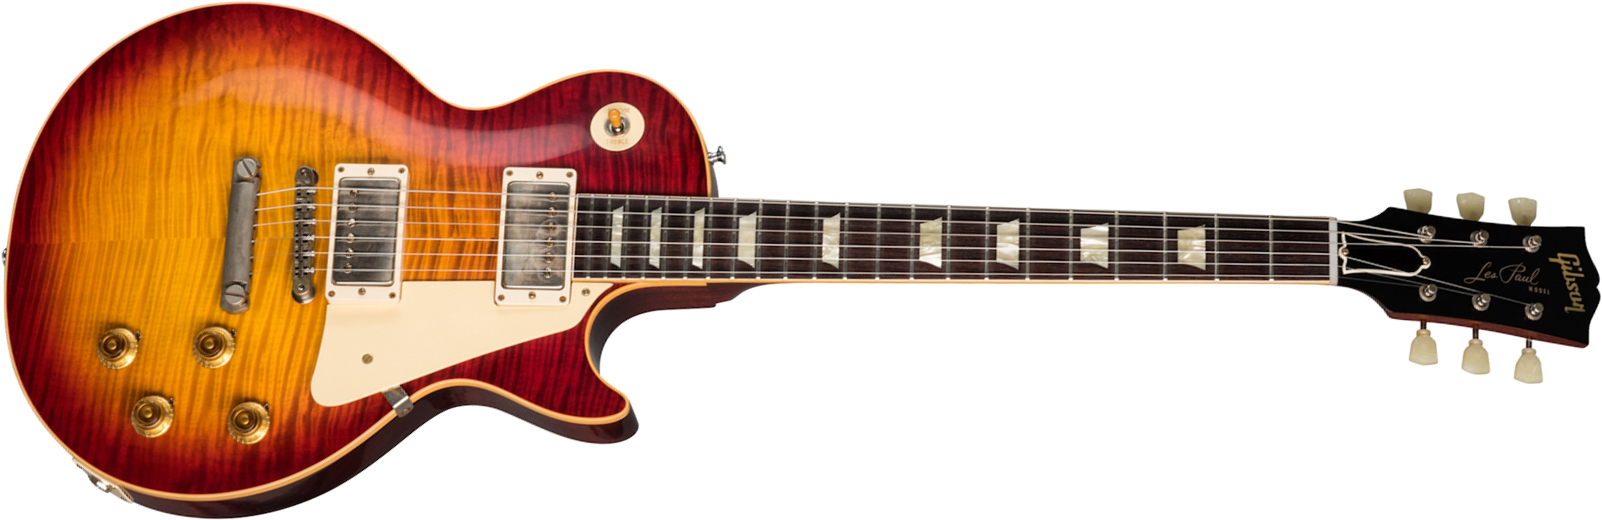 Gibson Custom Shop Les Paul Standard 1959 60th Anniversary Bolivian Rw - Vos Factory Burst - Single cut electric guitar - Main picture